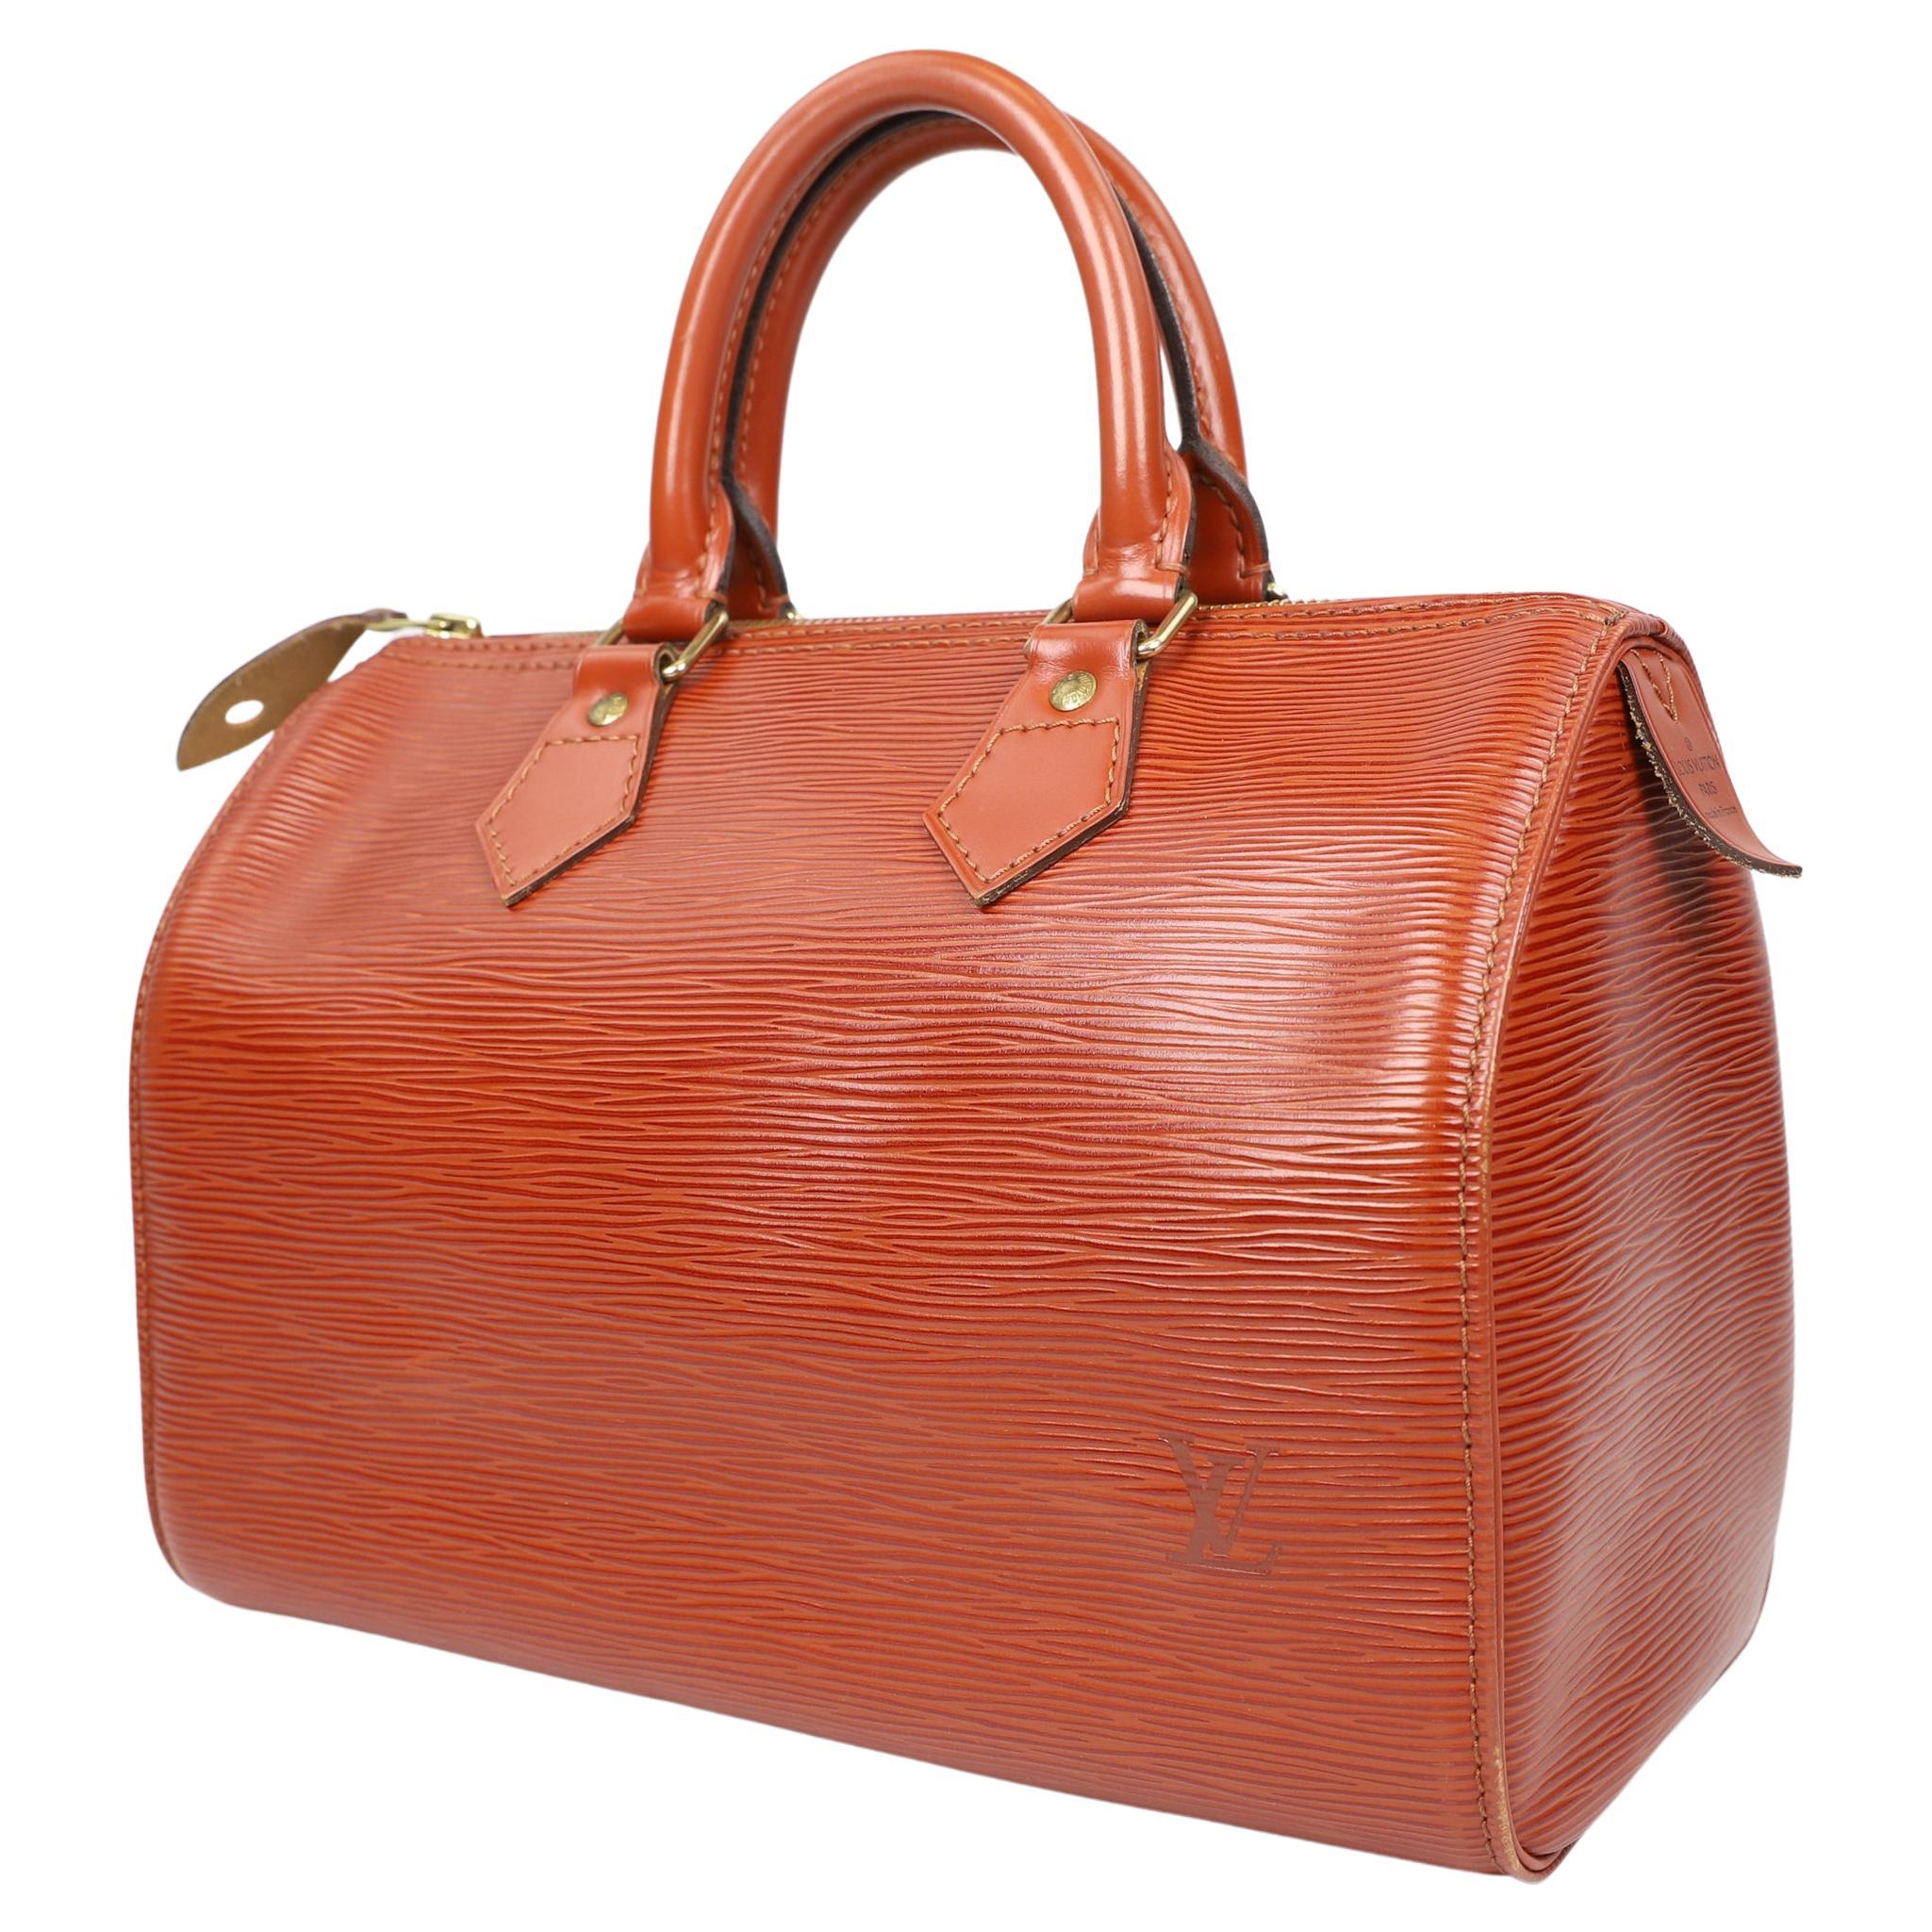 Louis Vuitton Speedy leather handbag